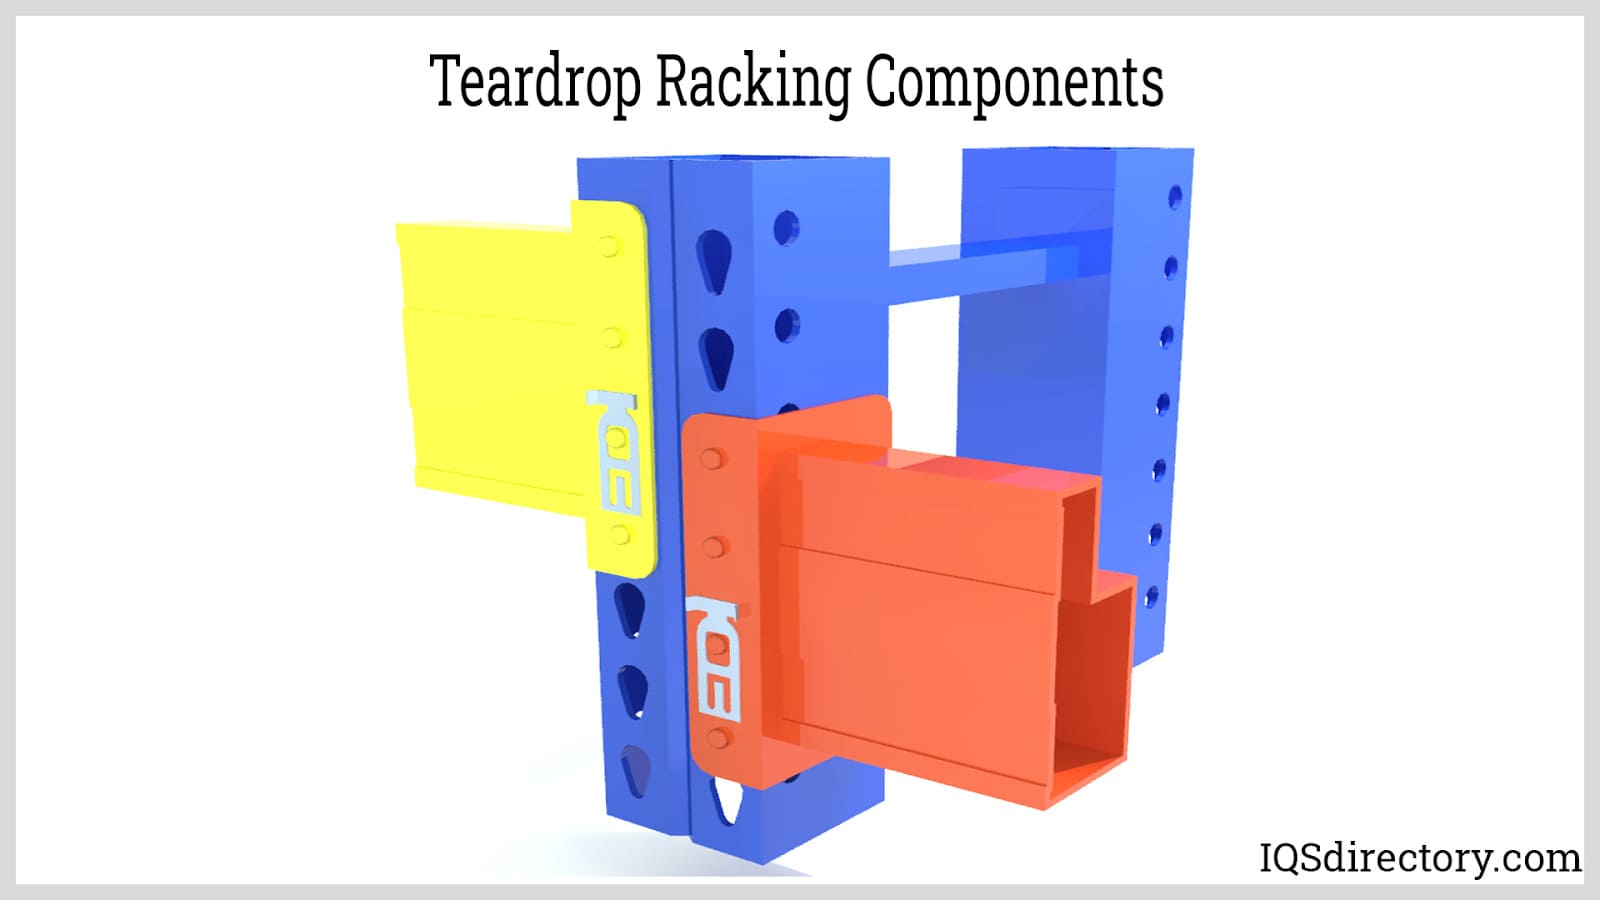 Teardrop Racking Components